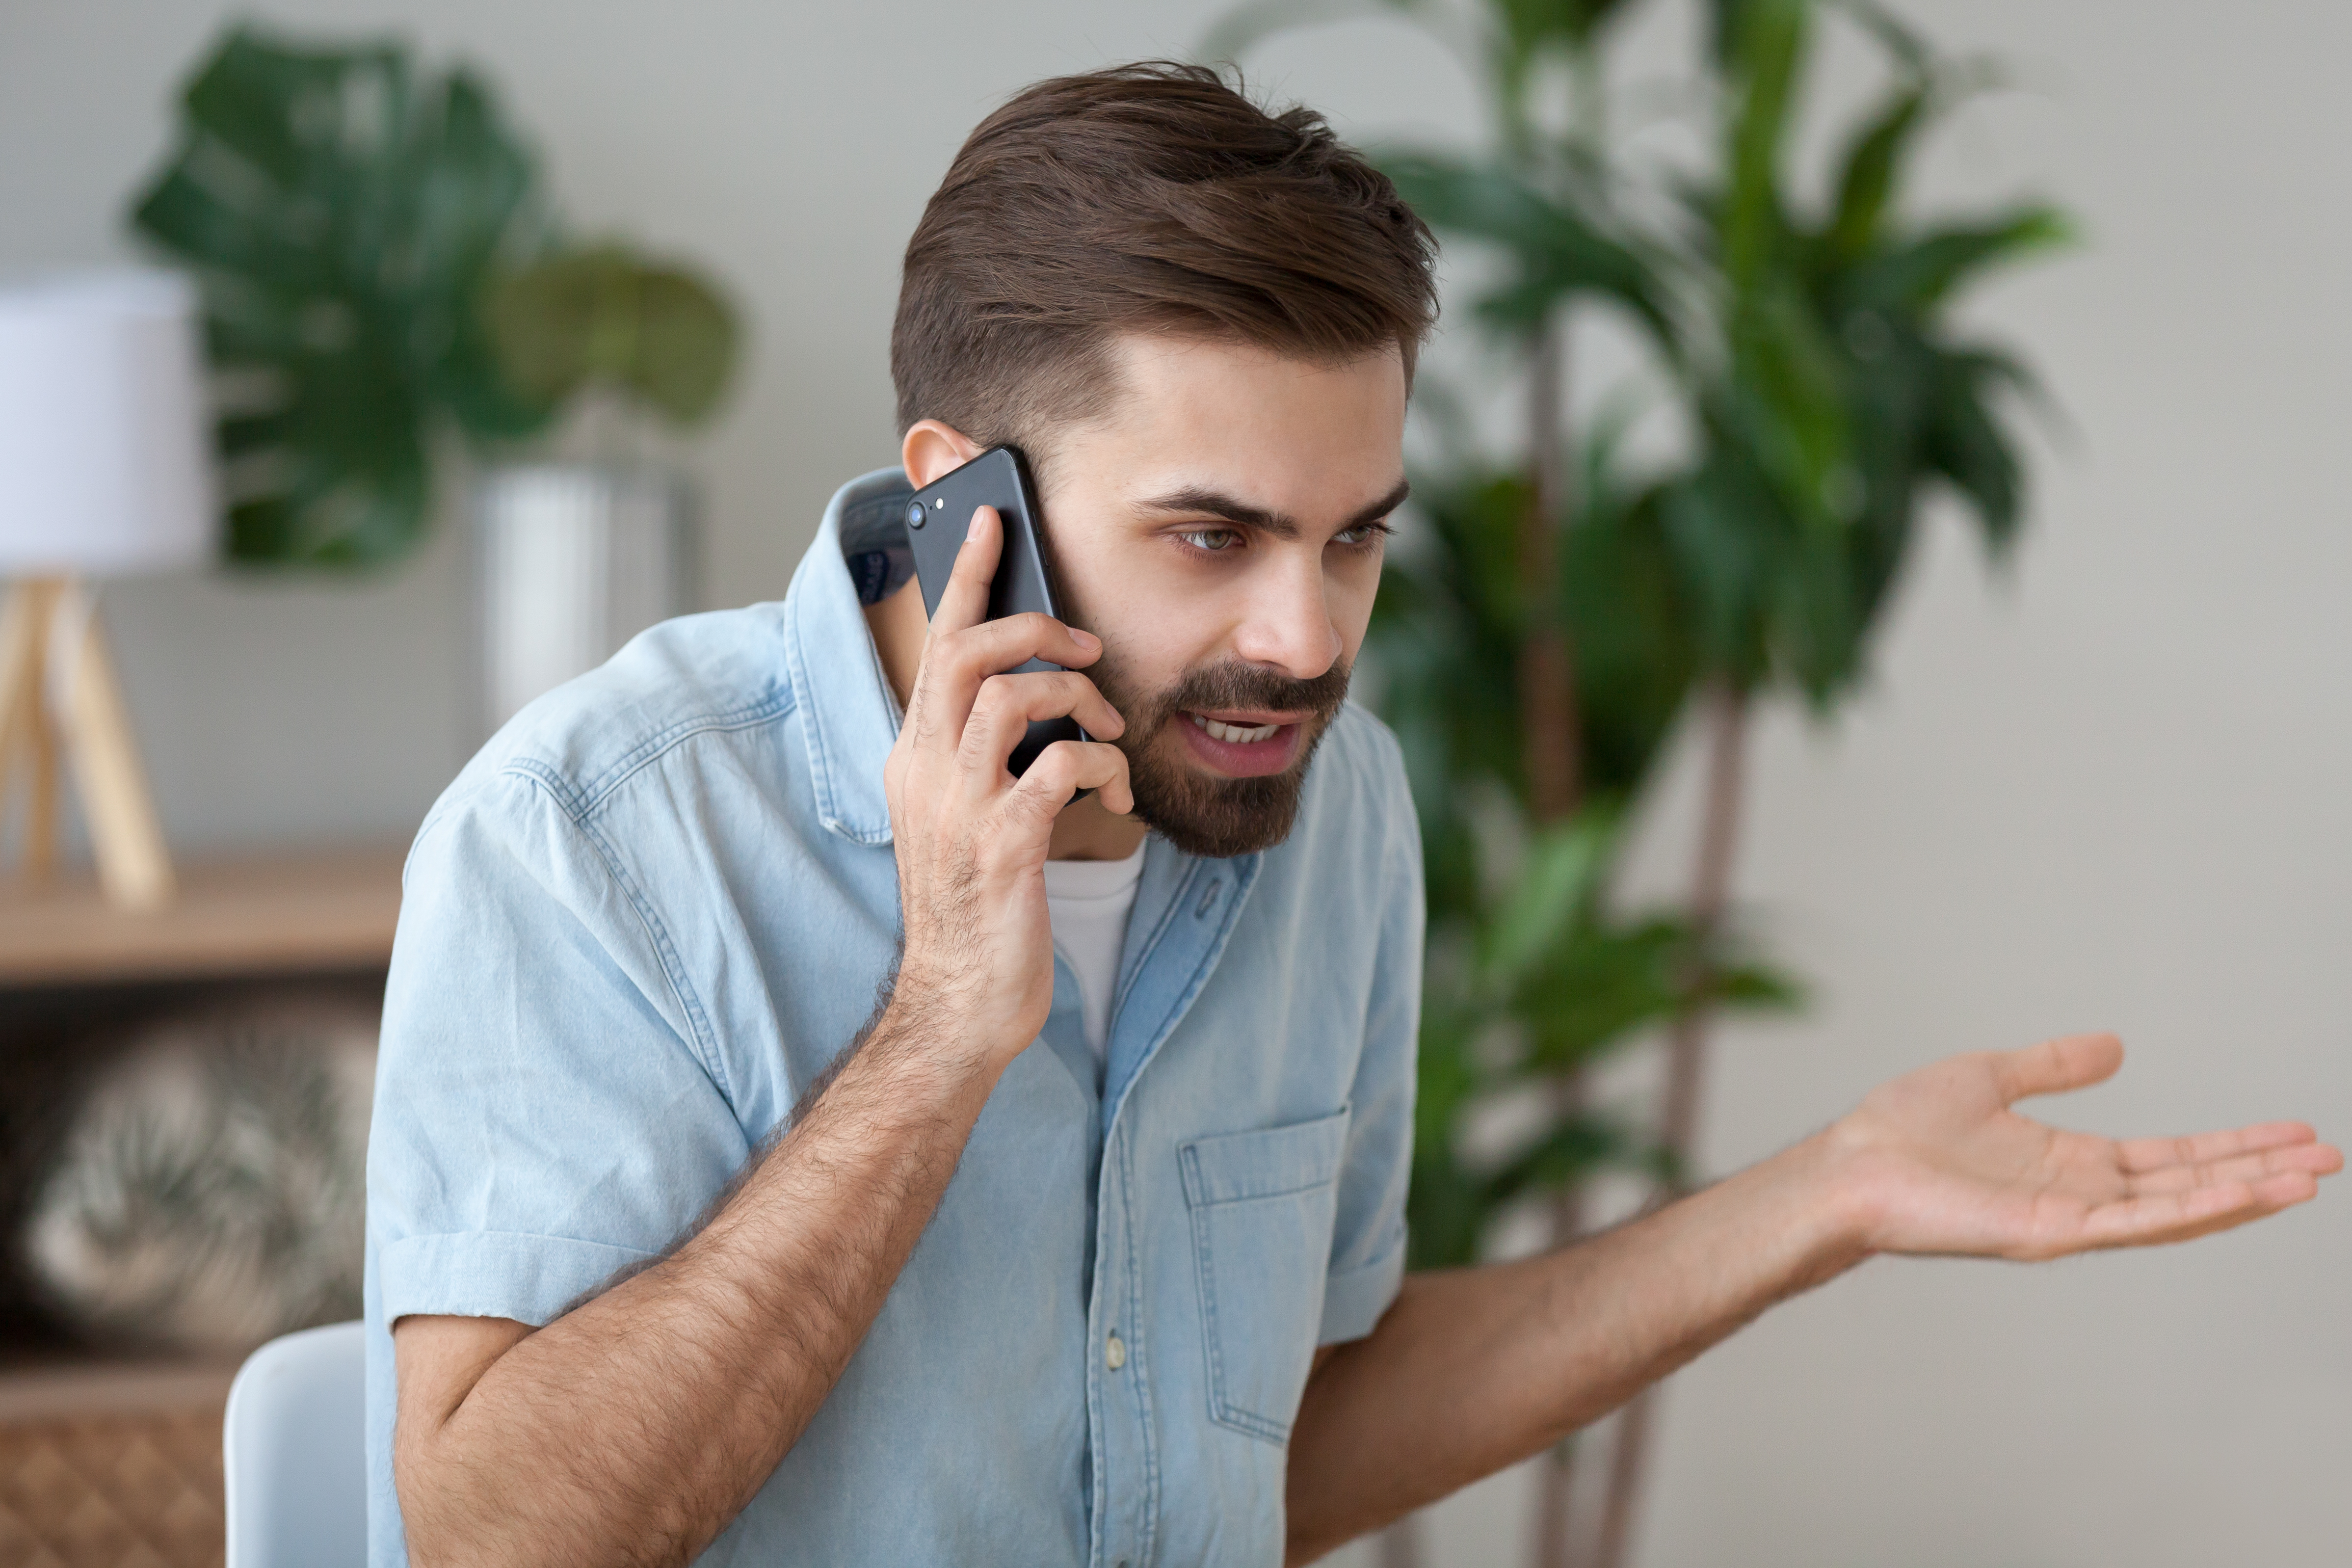 A man arguing on a phone call | Source: Shutterstock